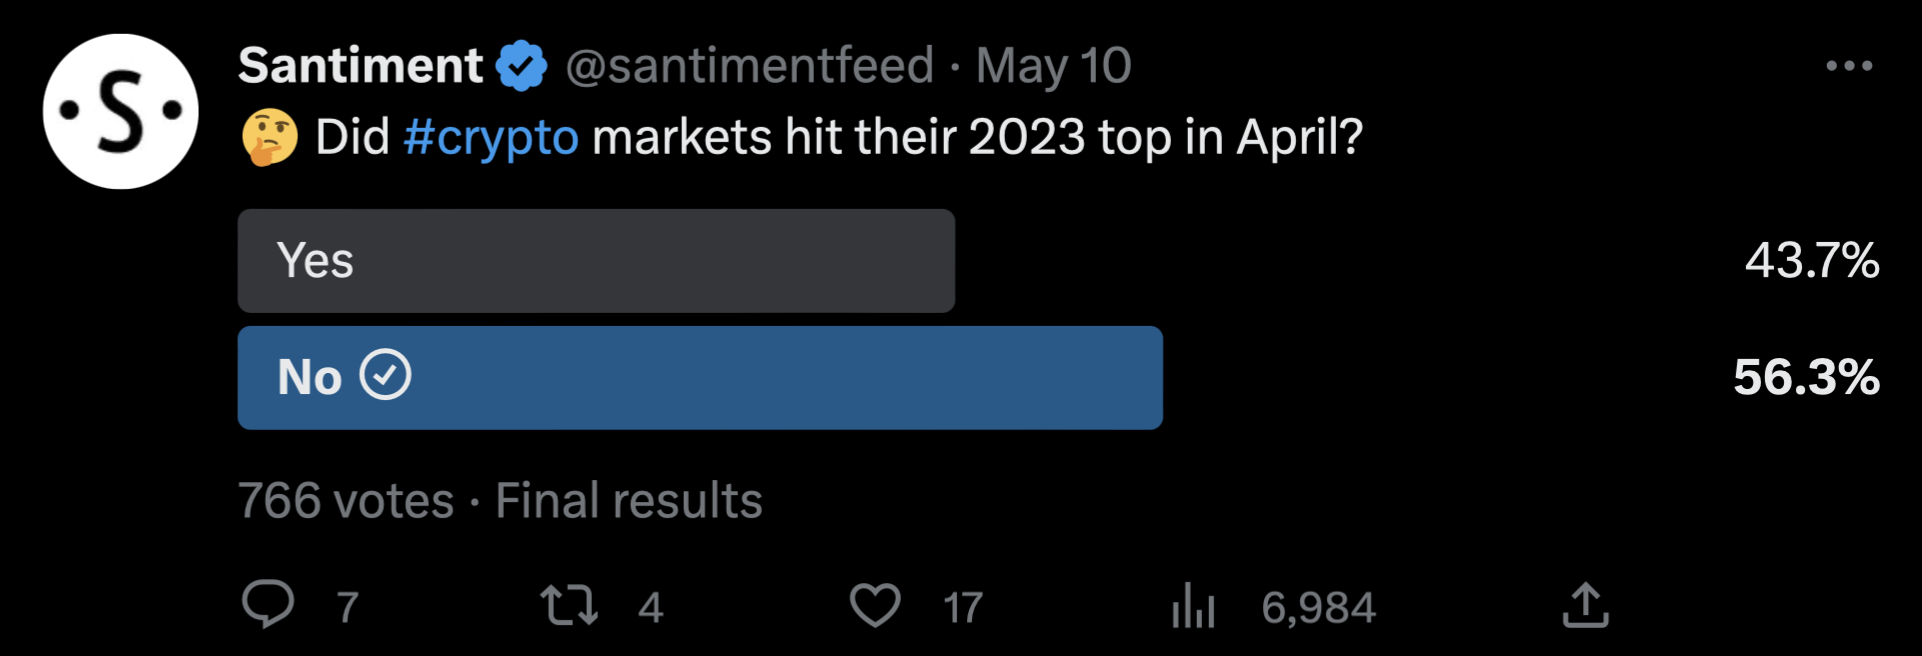 Santiment's poll to assess market sentiment